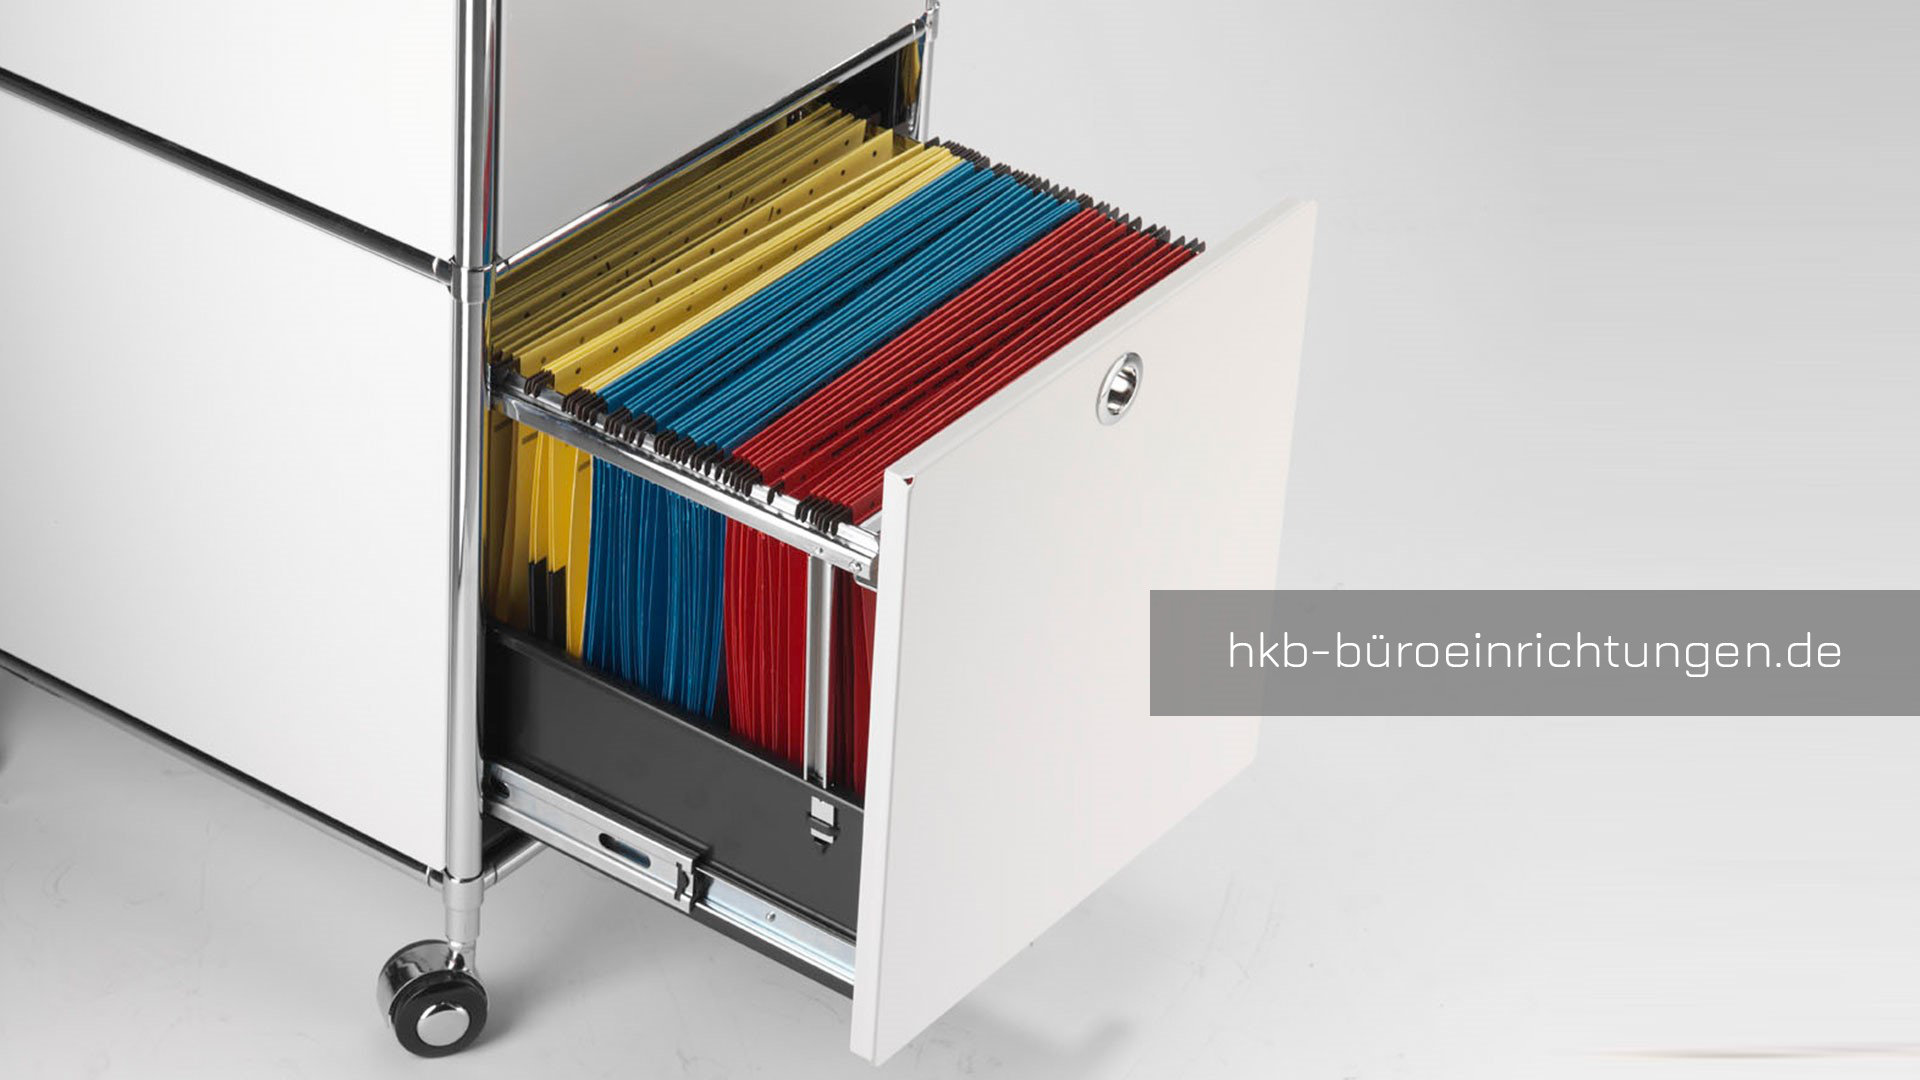 Büromöbel Metall Rollcontainer in kleiner Ausführung mit 3 Metall Schubladen Büromöbel Metall Produktfamilie in 10 verschiedenen Farben